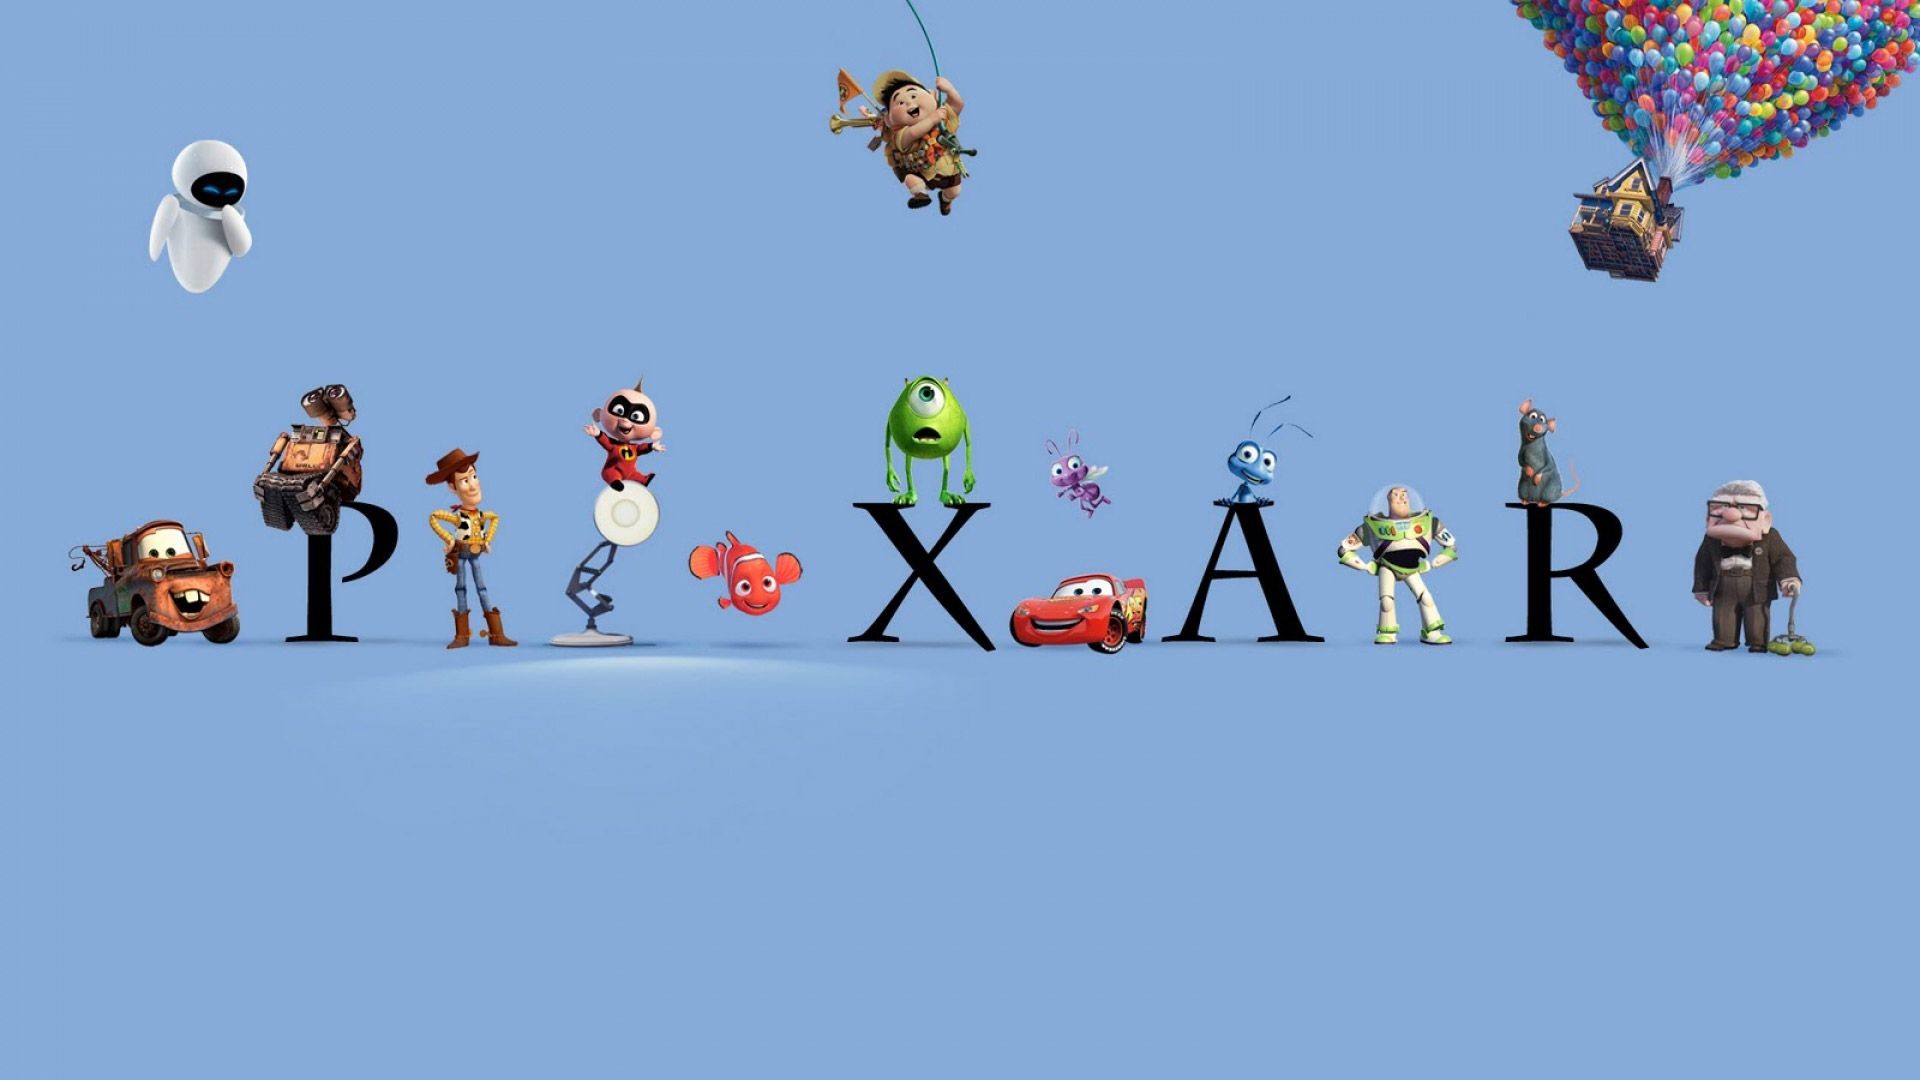 1920x1080 disney pixar - Google Search. Disney Pixar Up Wallpaper ...